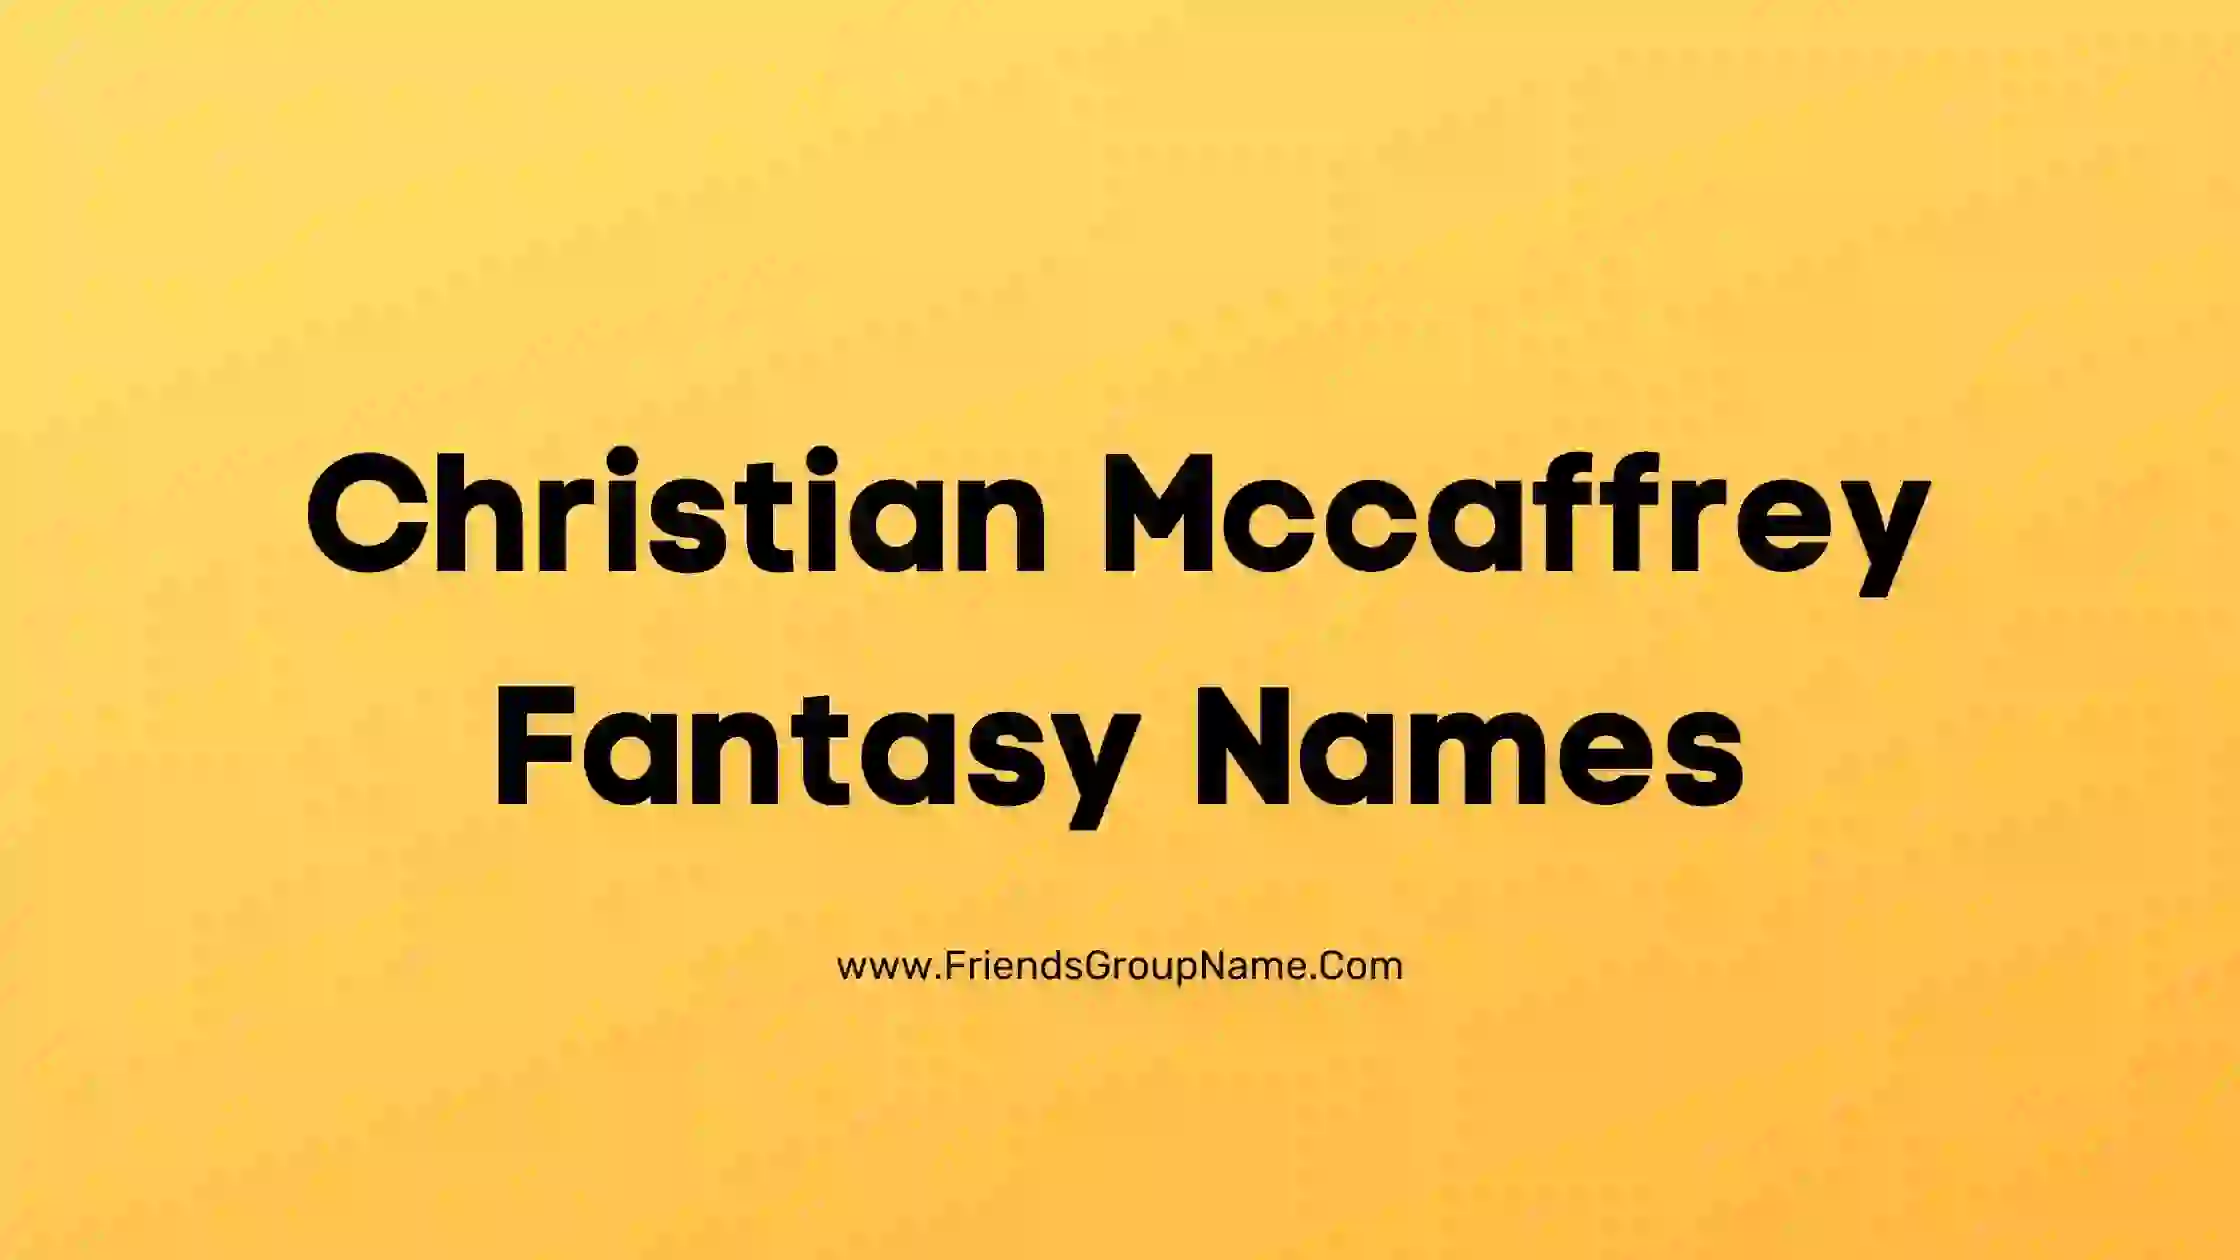 Christian Mccaffrey Fantasy Names